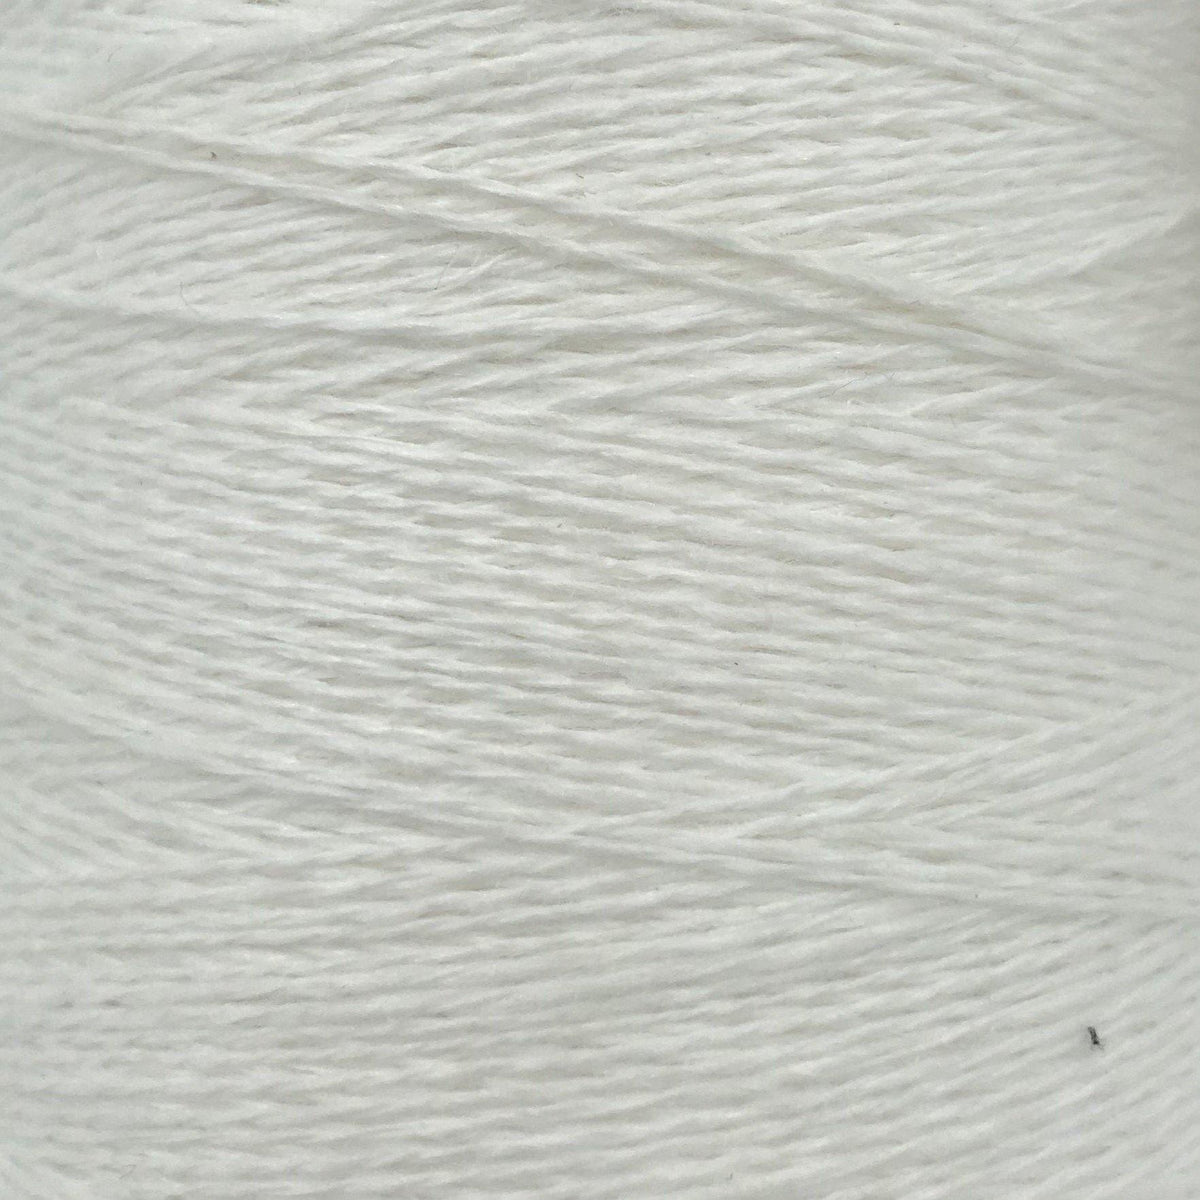 80% Linen, 20% Cotton 12/2 - theweavingroom